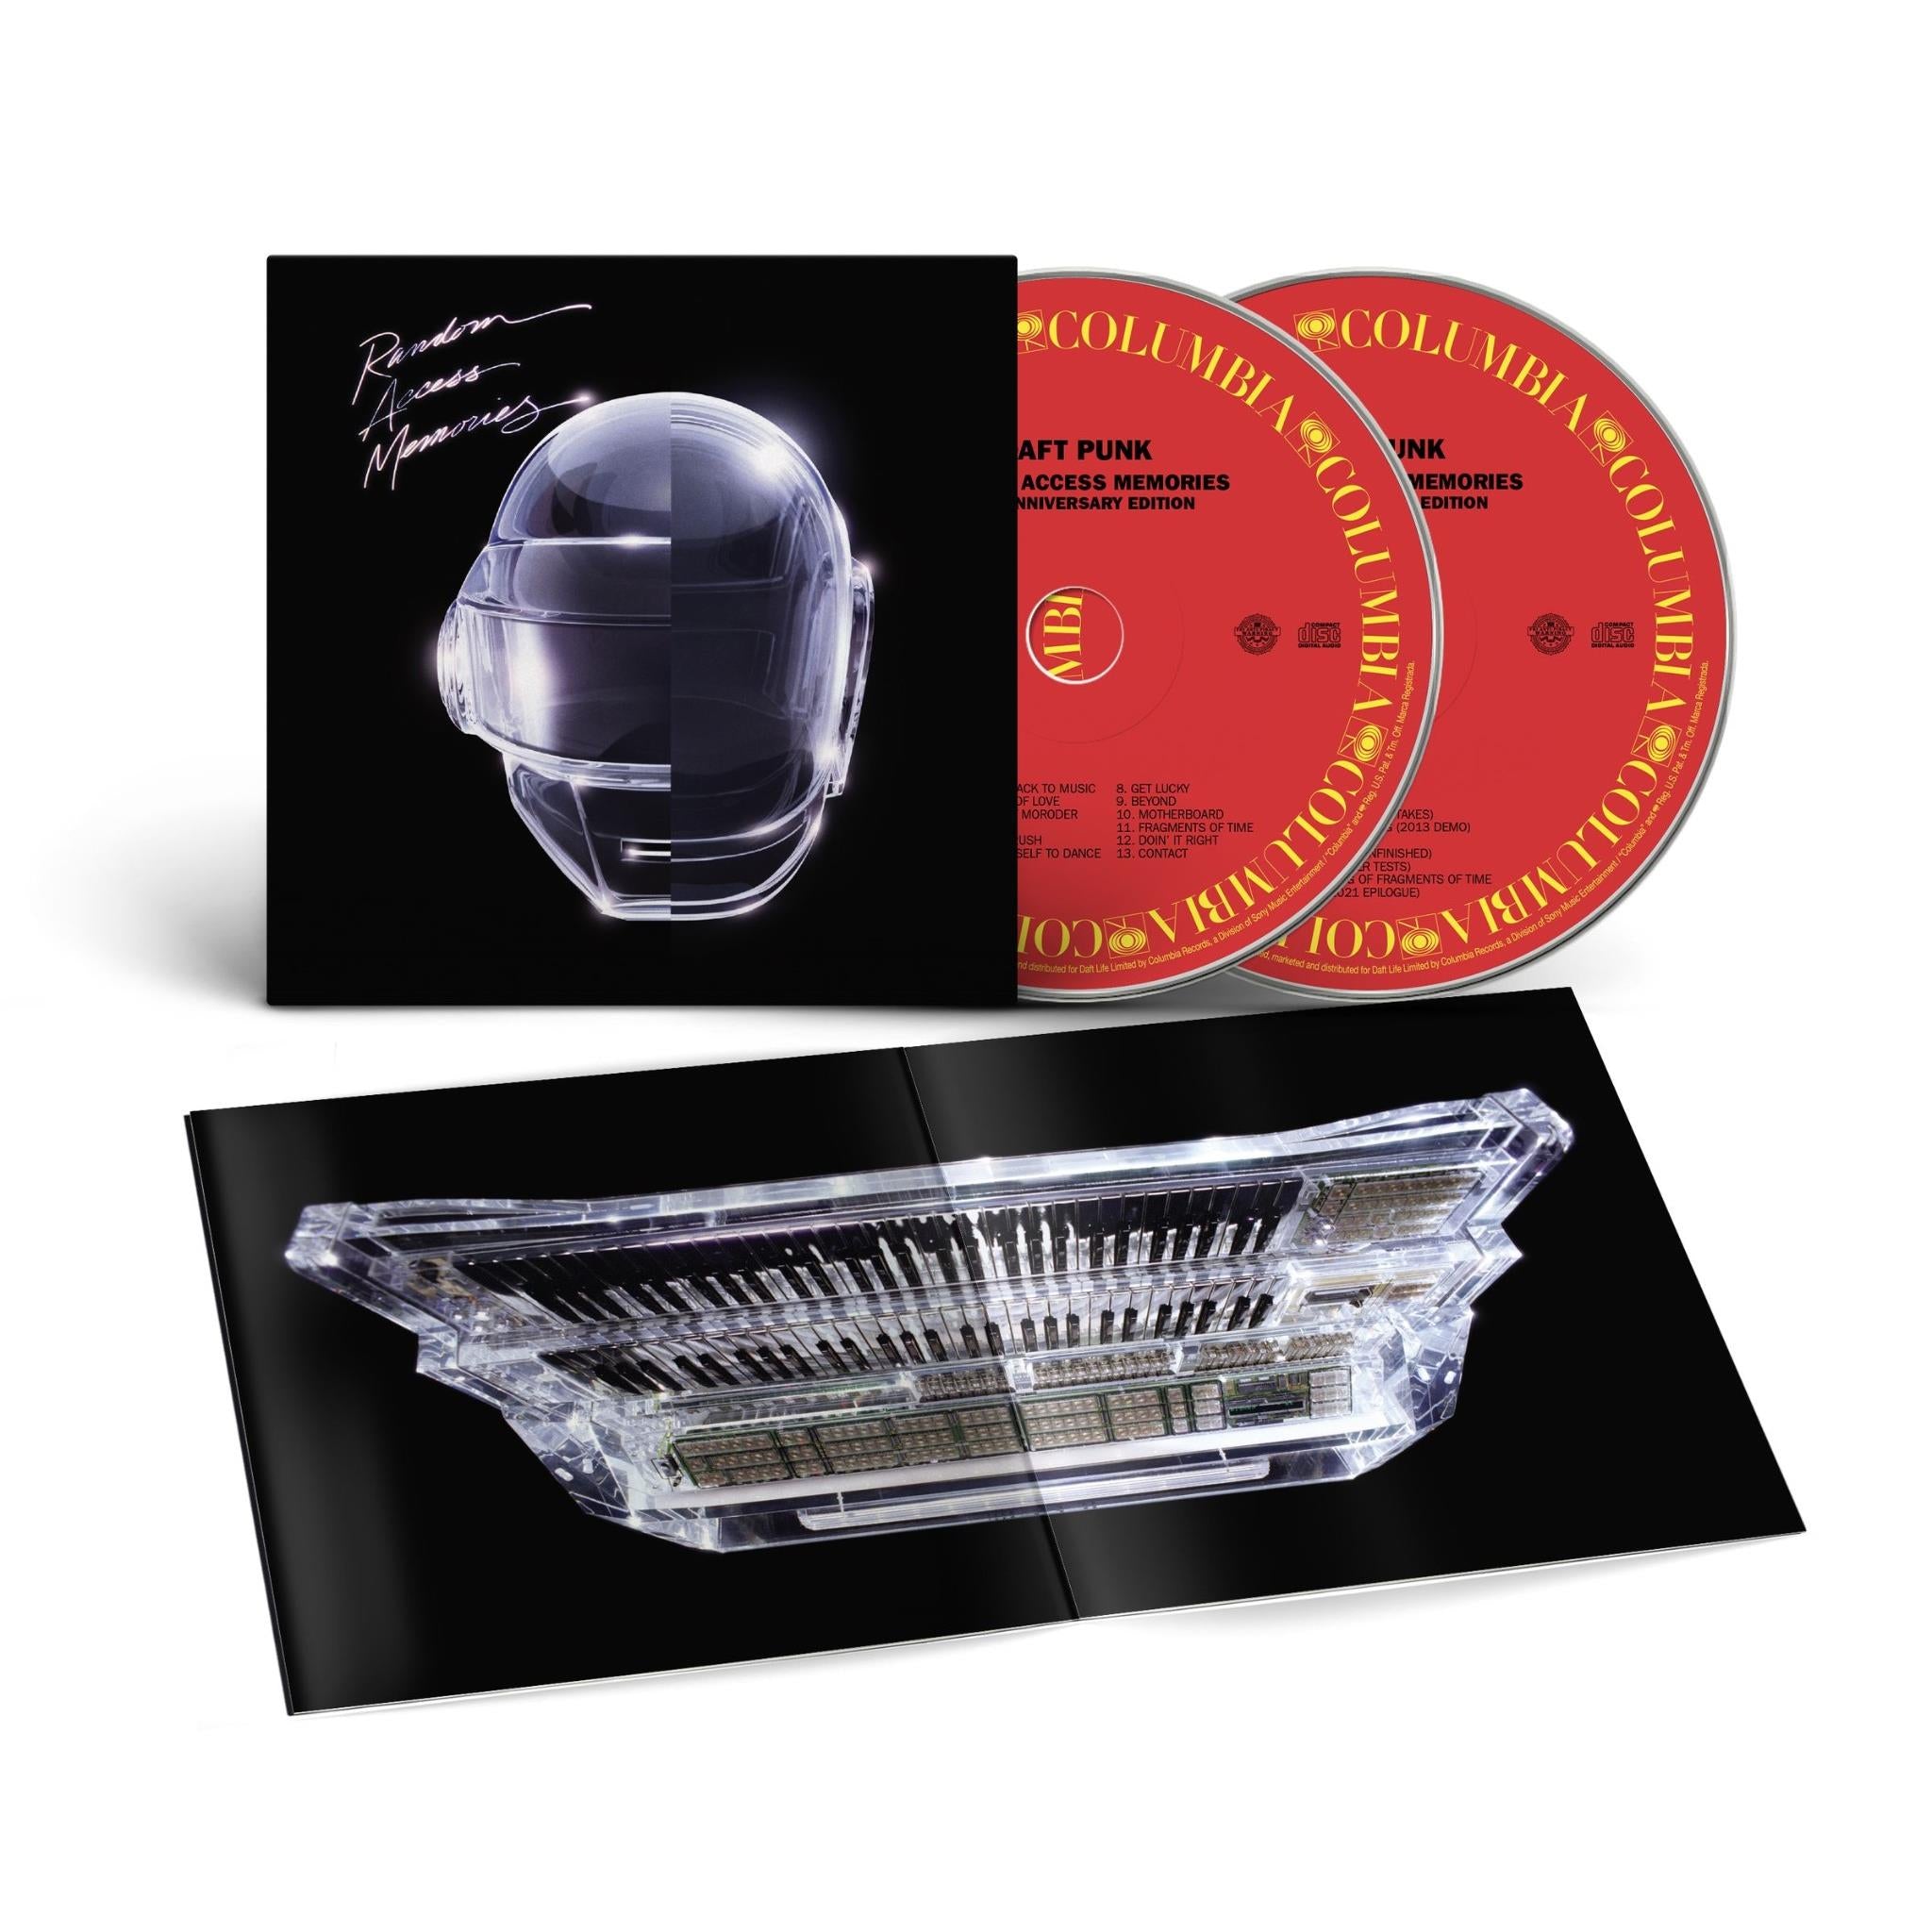 Daft Punk to Release a Live Vinyl Box Set